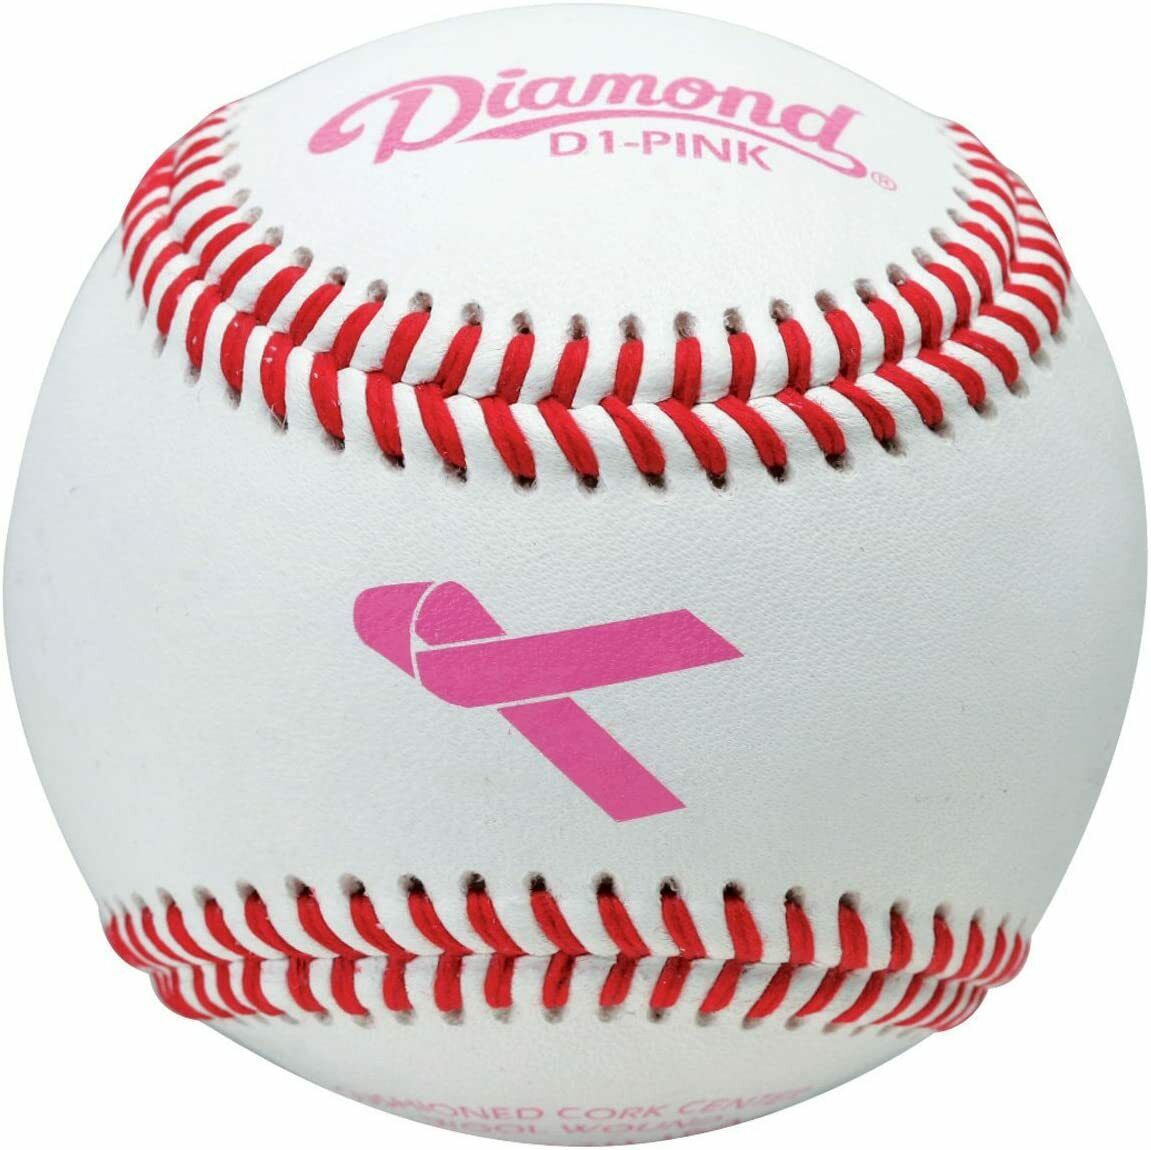 Diamond Sports | D1-PINK | Pink Special Theme Event Baseballs | 1 Dozen Balls